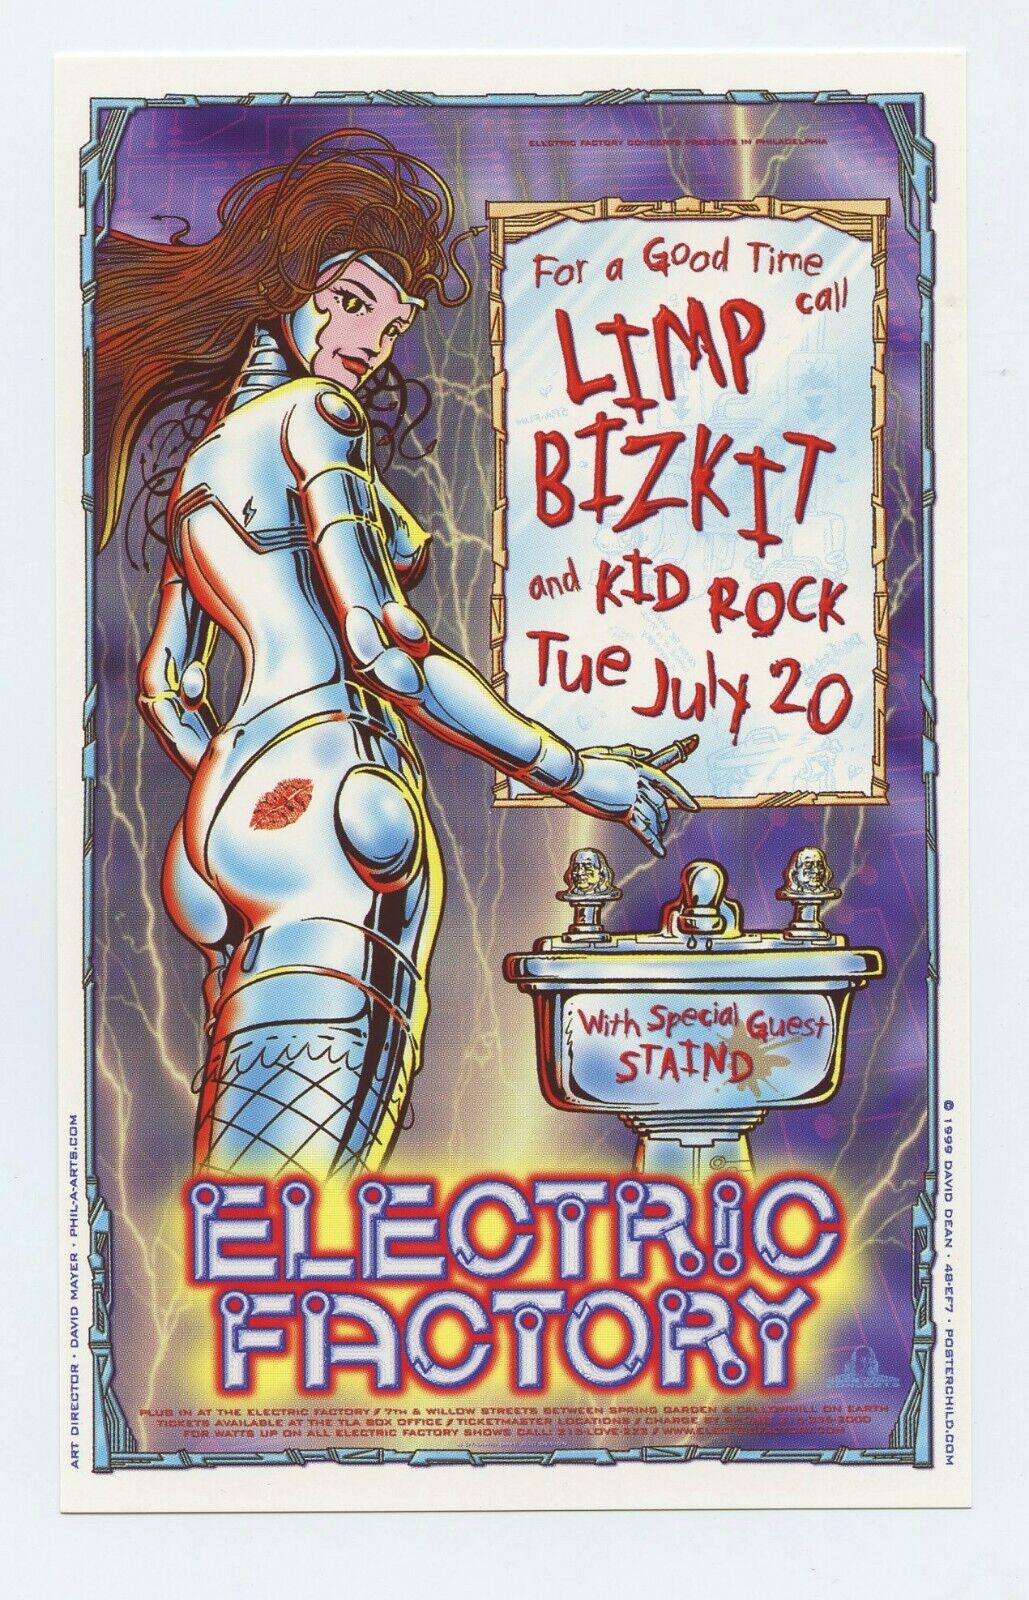 Limp Bizkit Handbill1999 Jul 20 Electric Factory Philadelphia